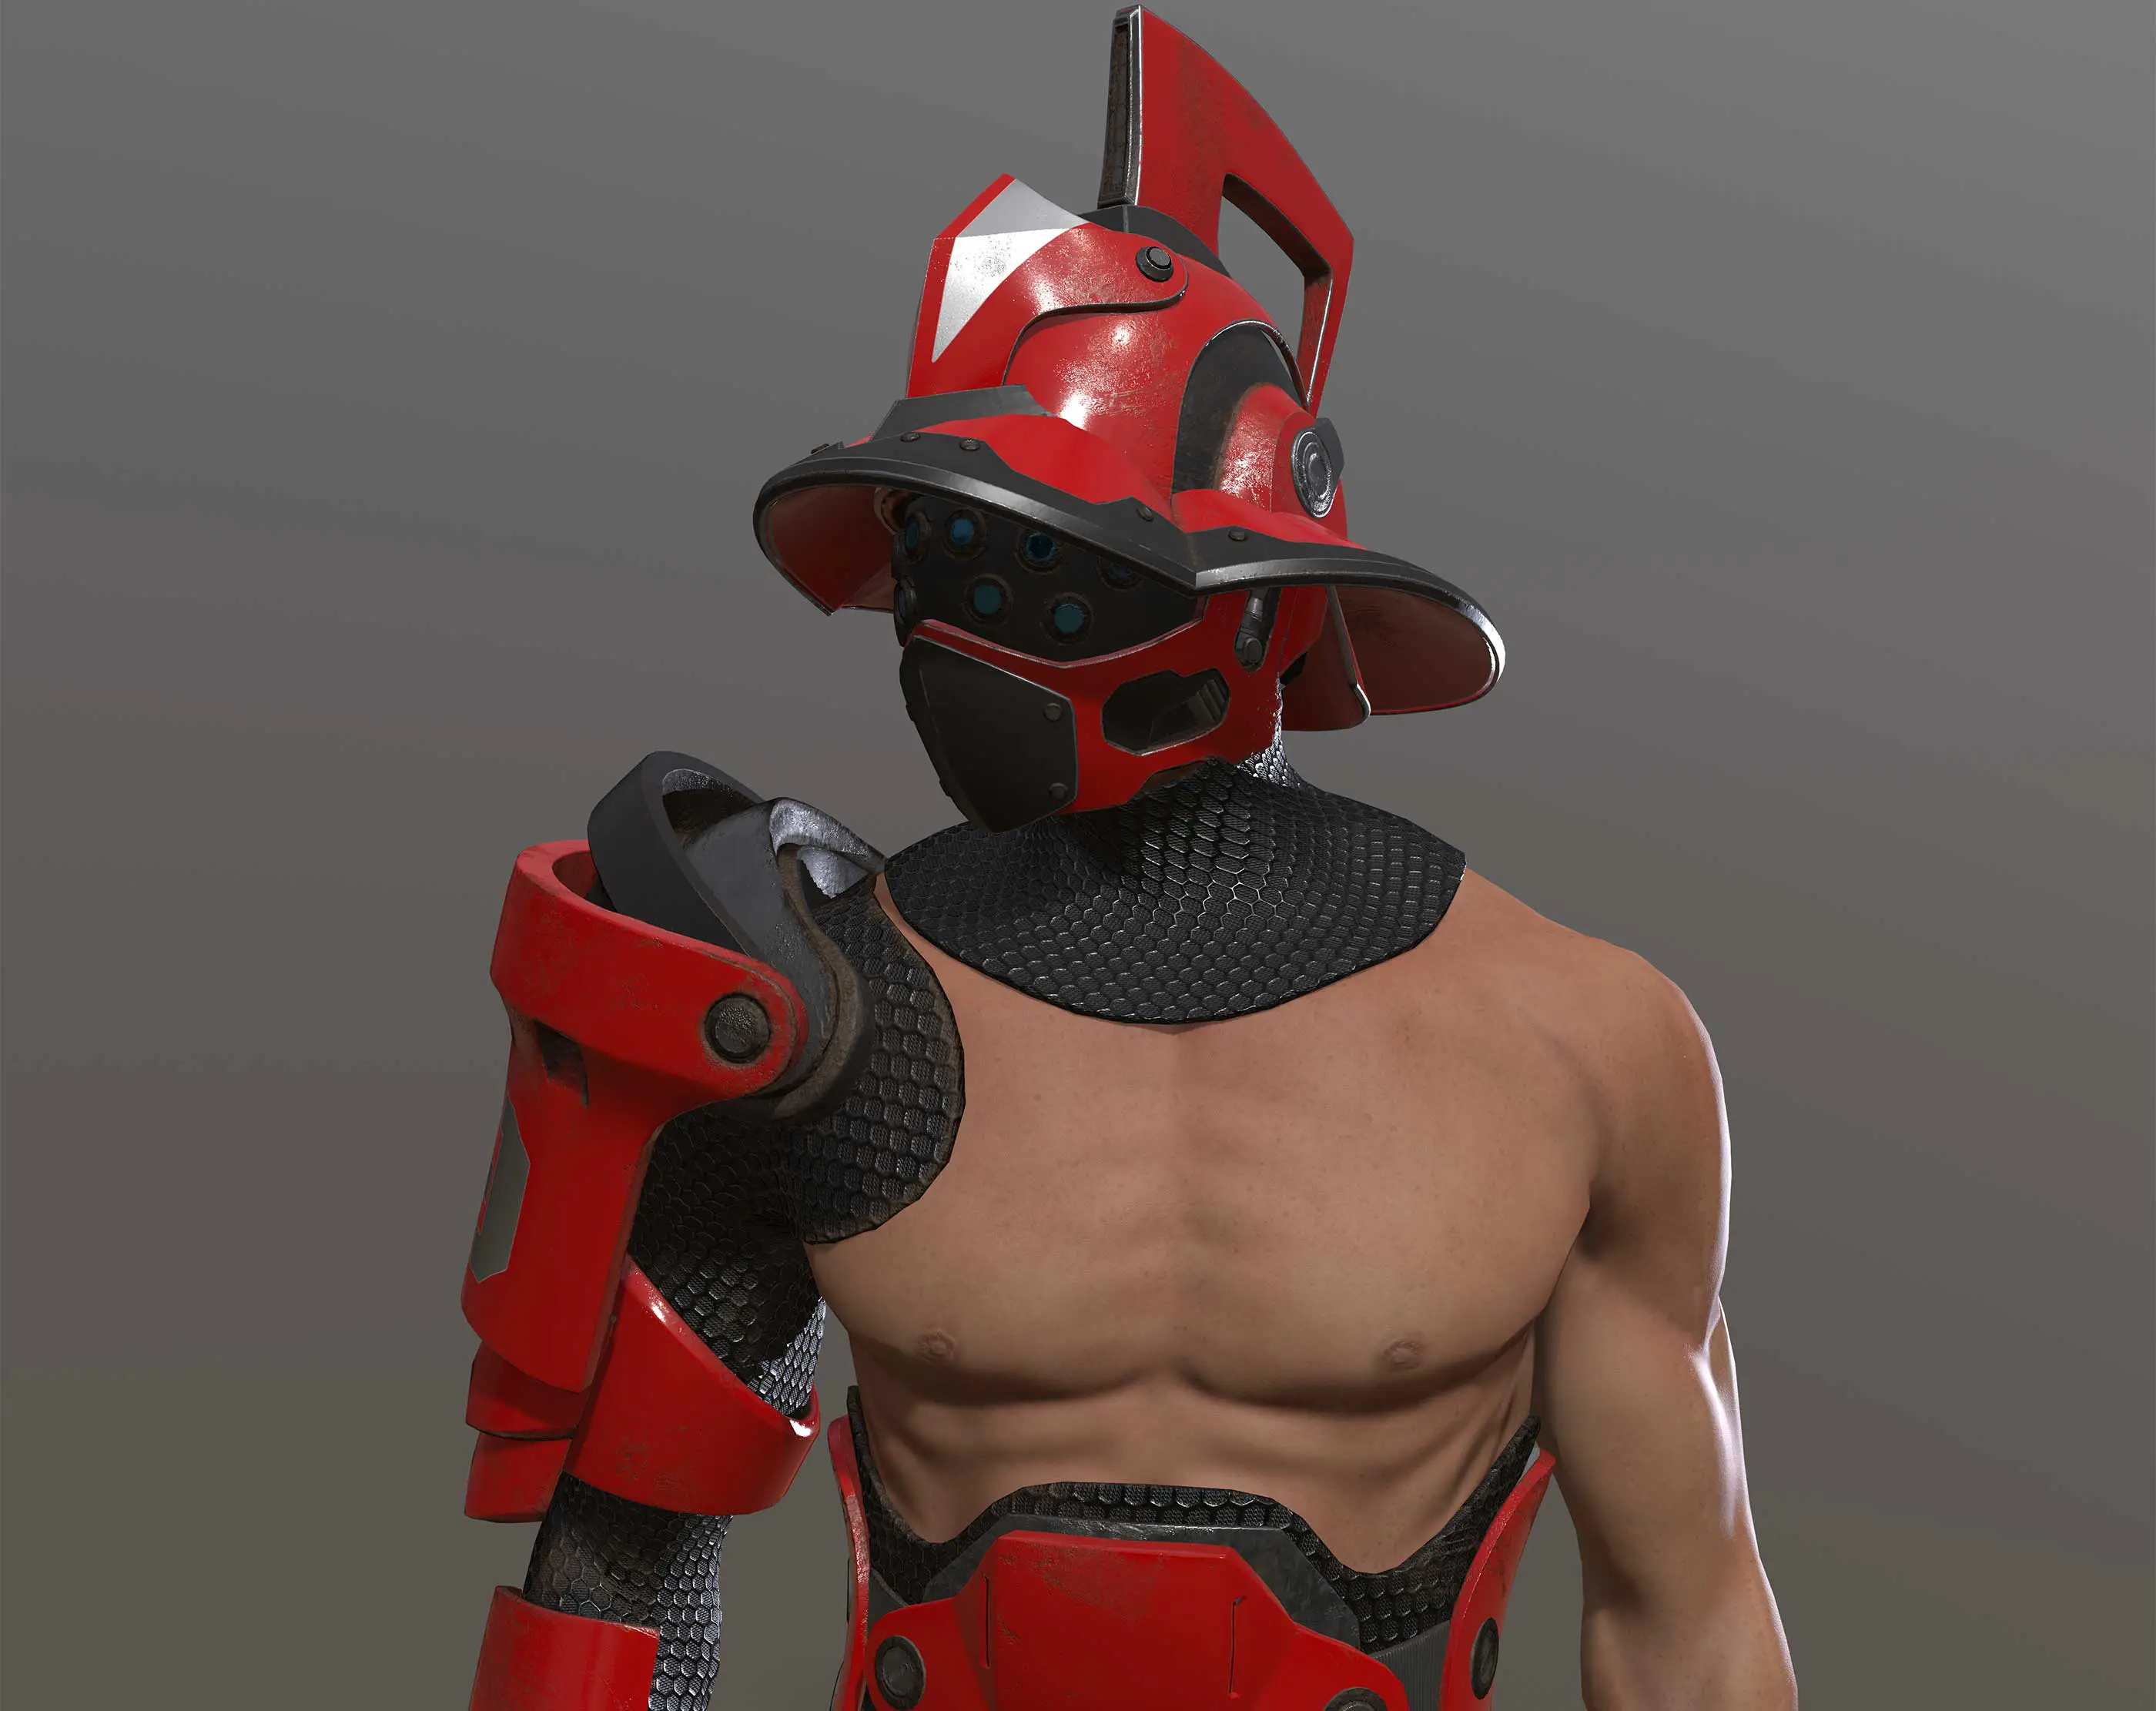 A 3D render of a person in partial futuristic armor.